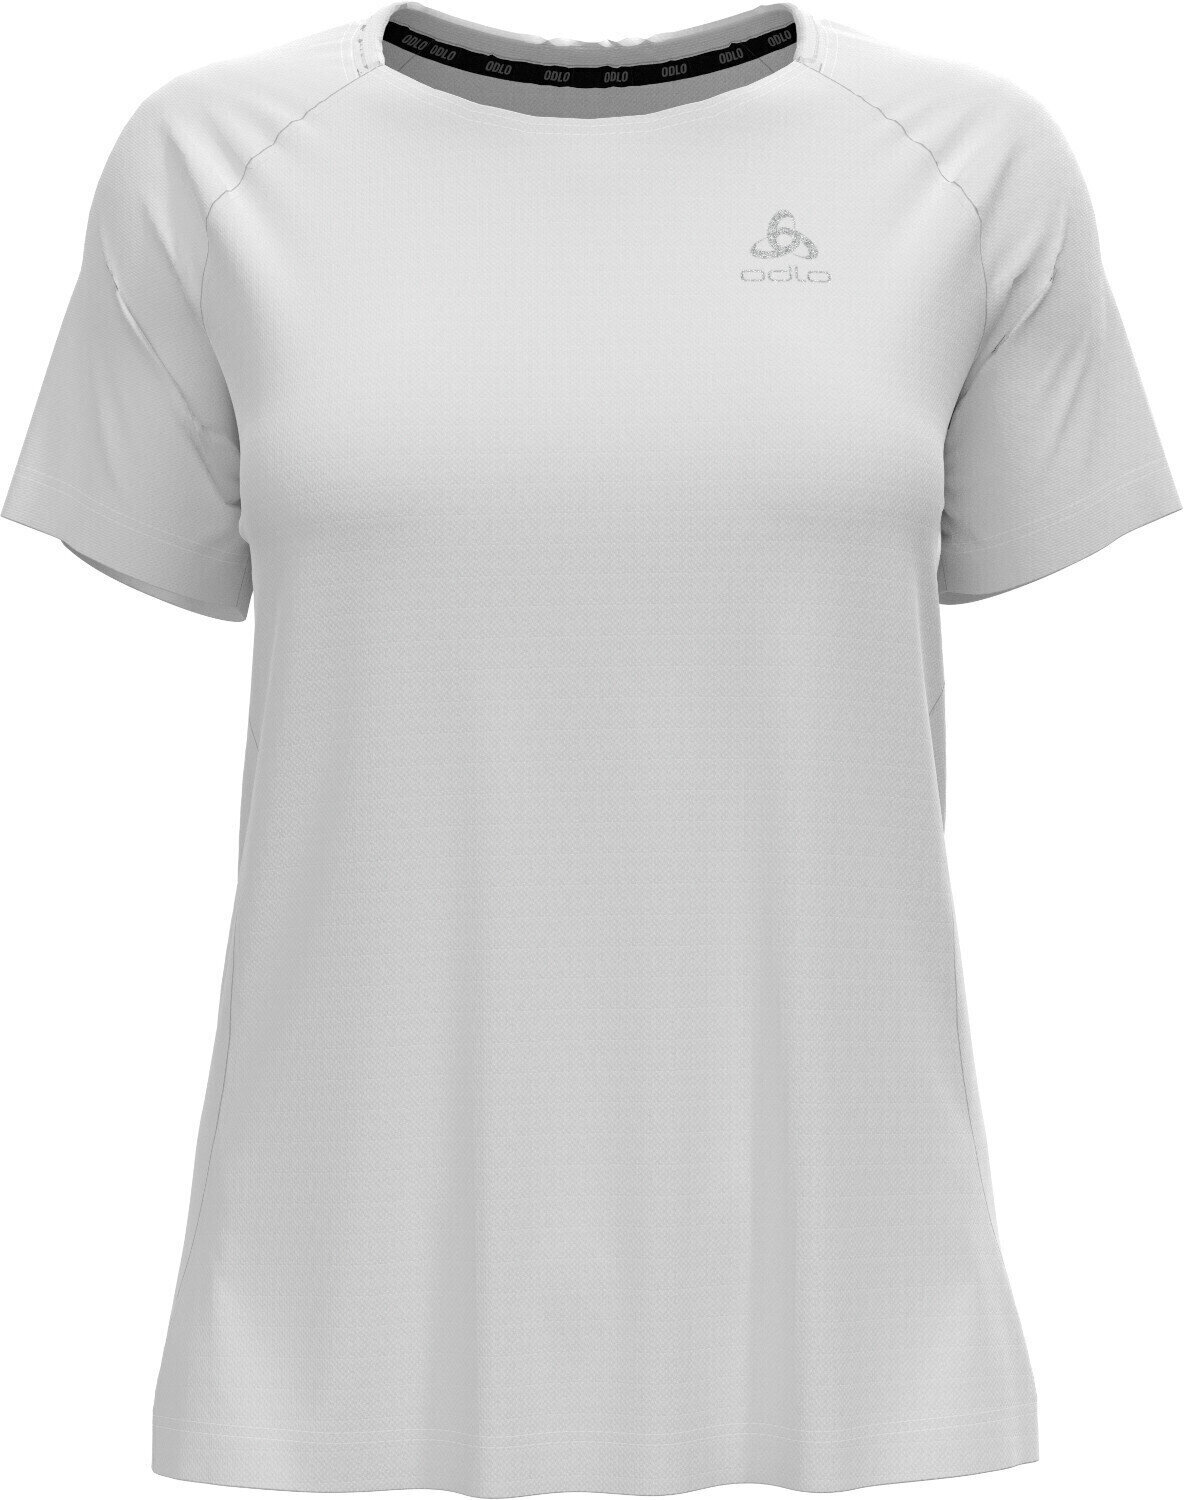 Running t-shirt with short sleeves
 Odlo Essential T-Shirt White S Running t-shirt with short sleeves